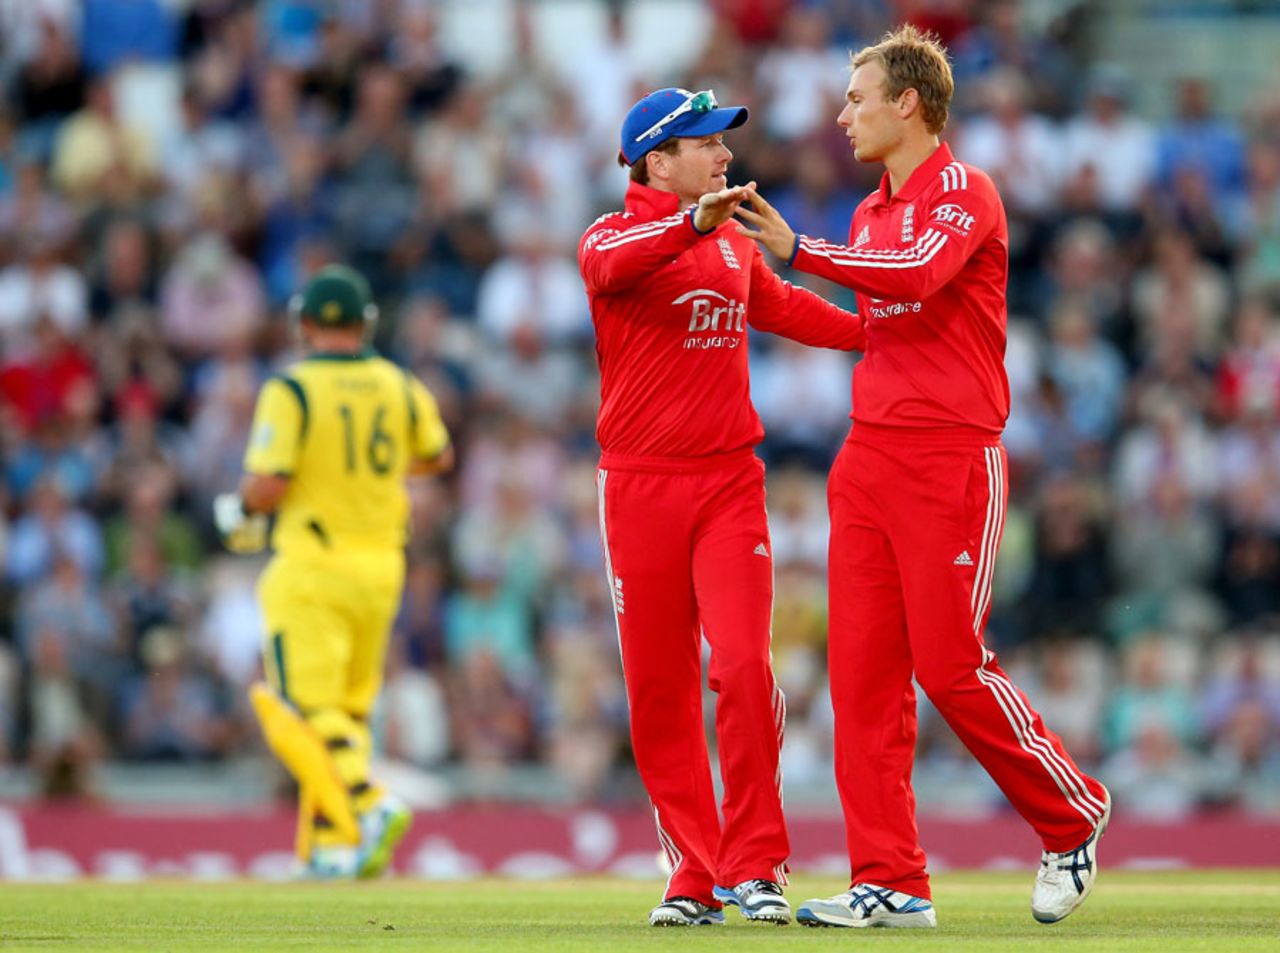 Danny Briggs claimed the wicket of Shaun Marsh, England v Australia, 1st T20, Ageas Bowl, August 29, 2013